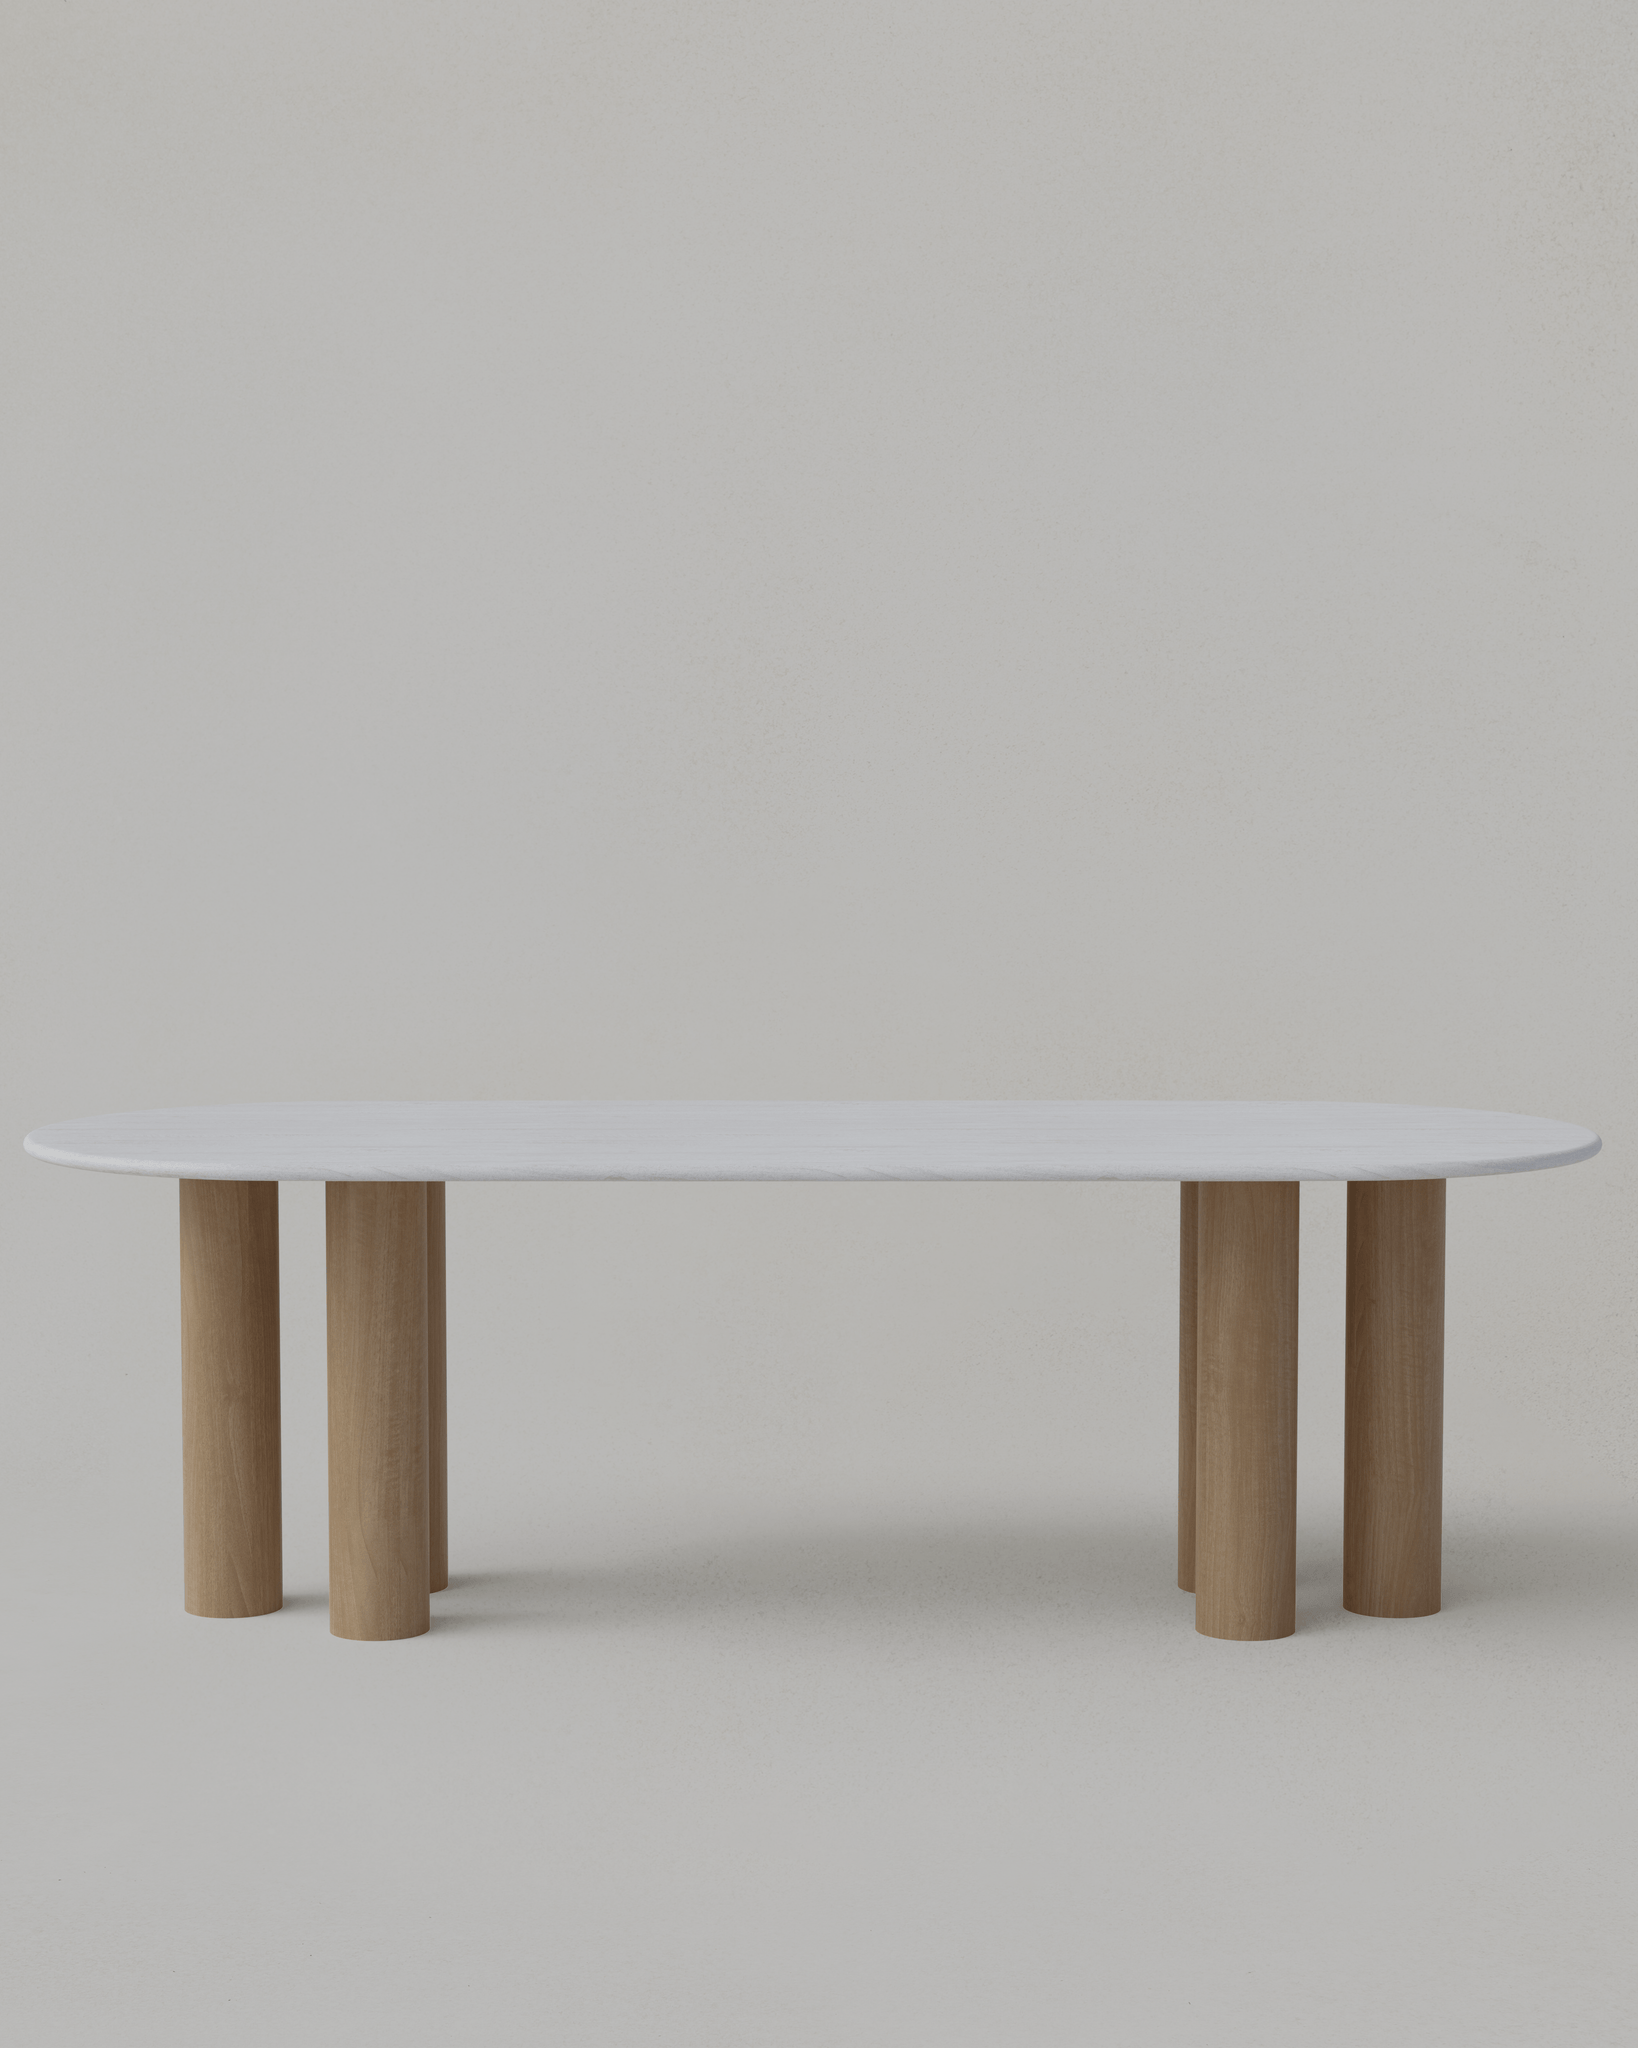 Six-Legged Oval Table